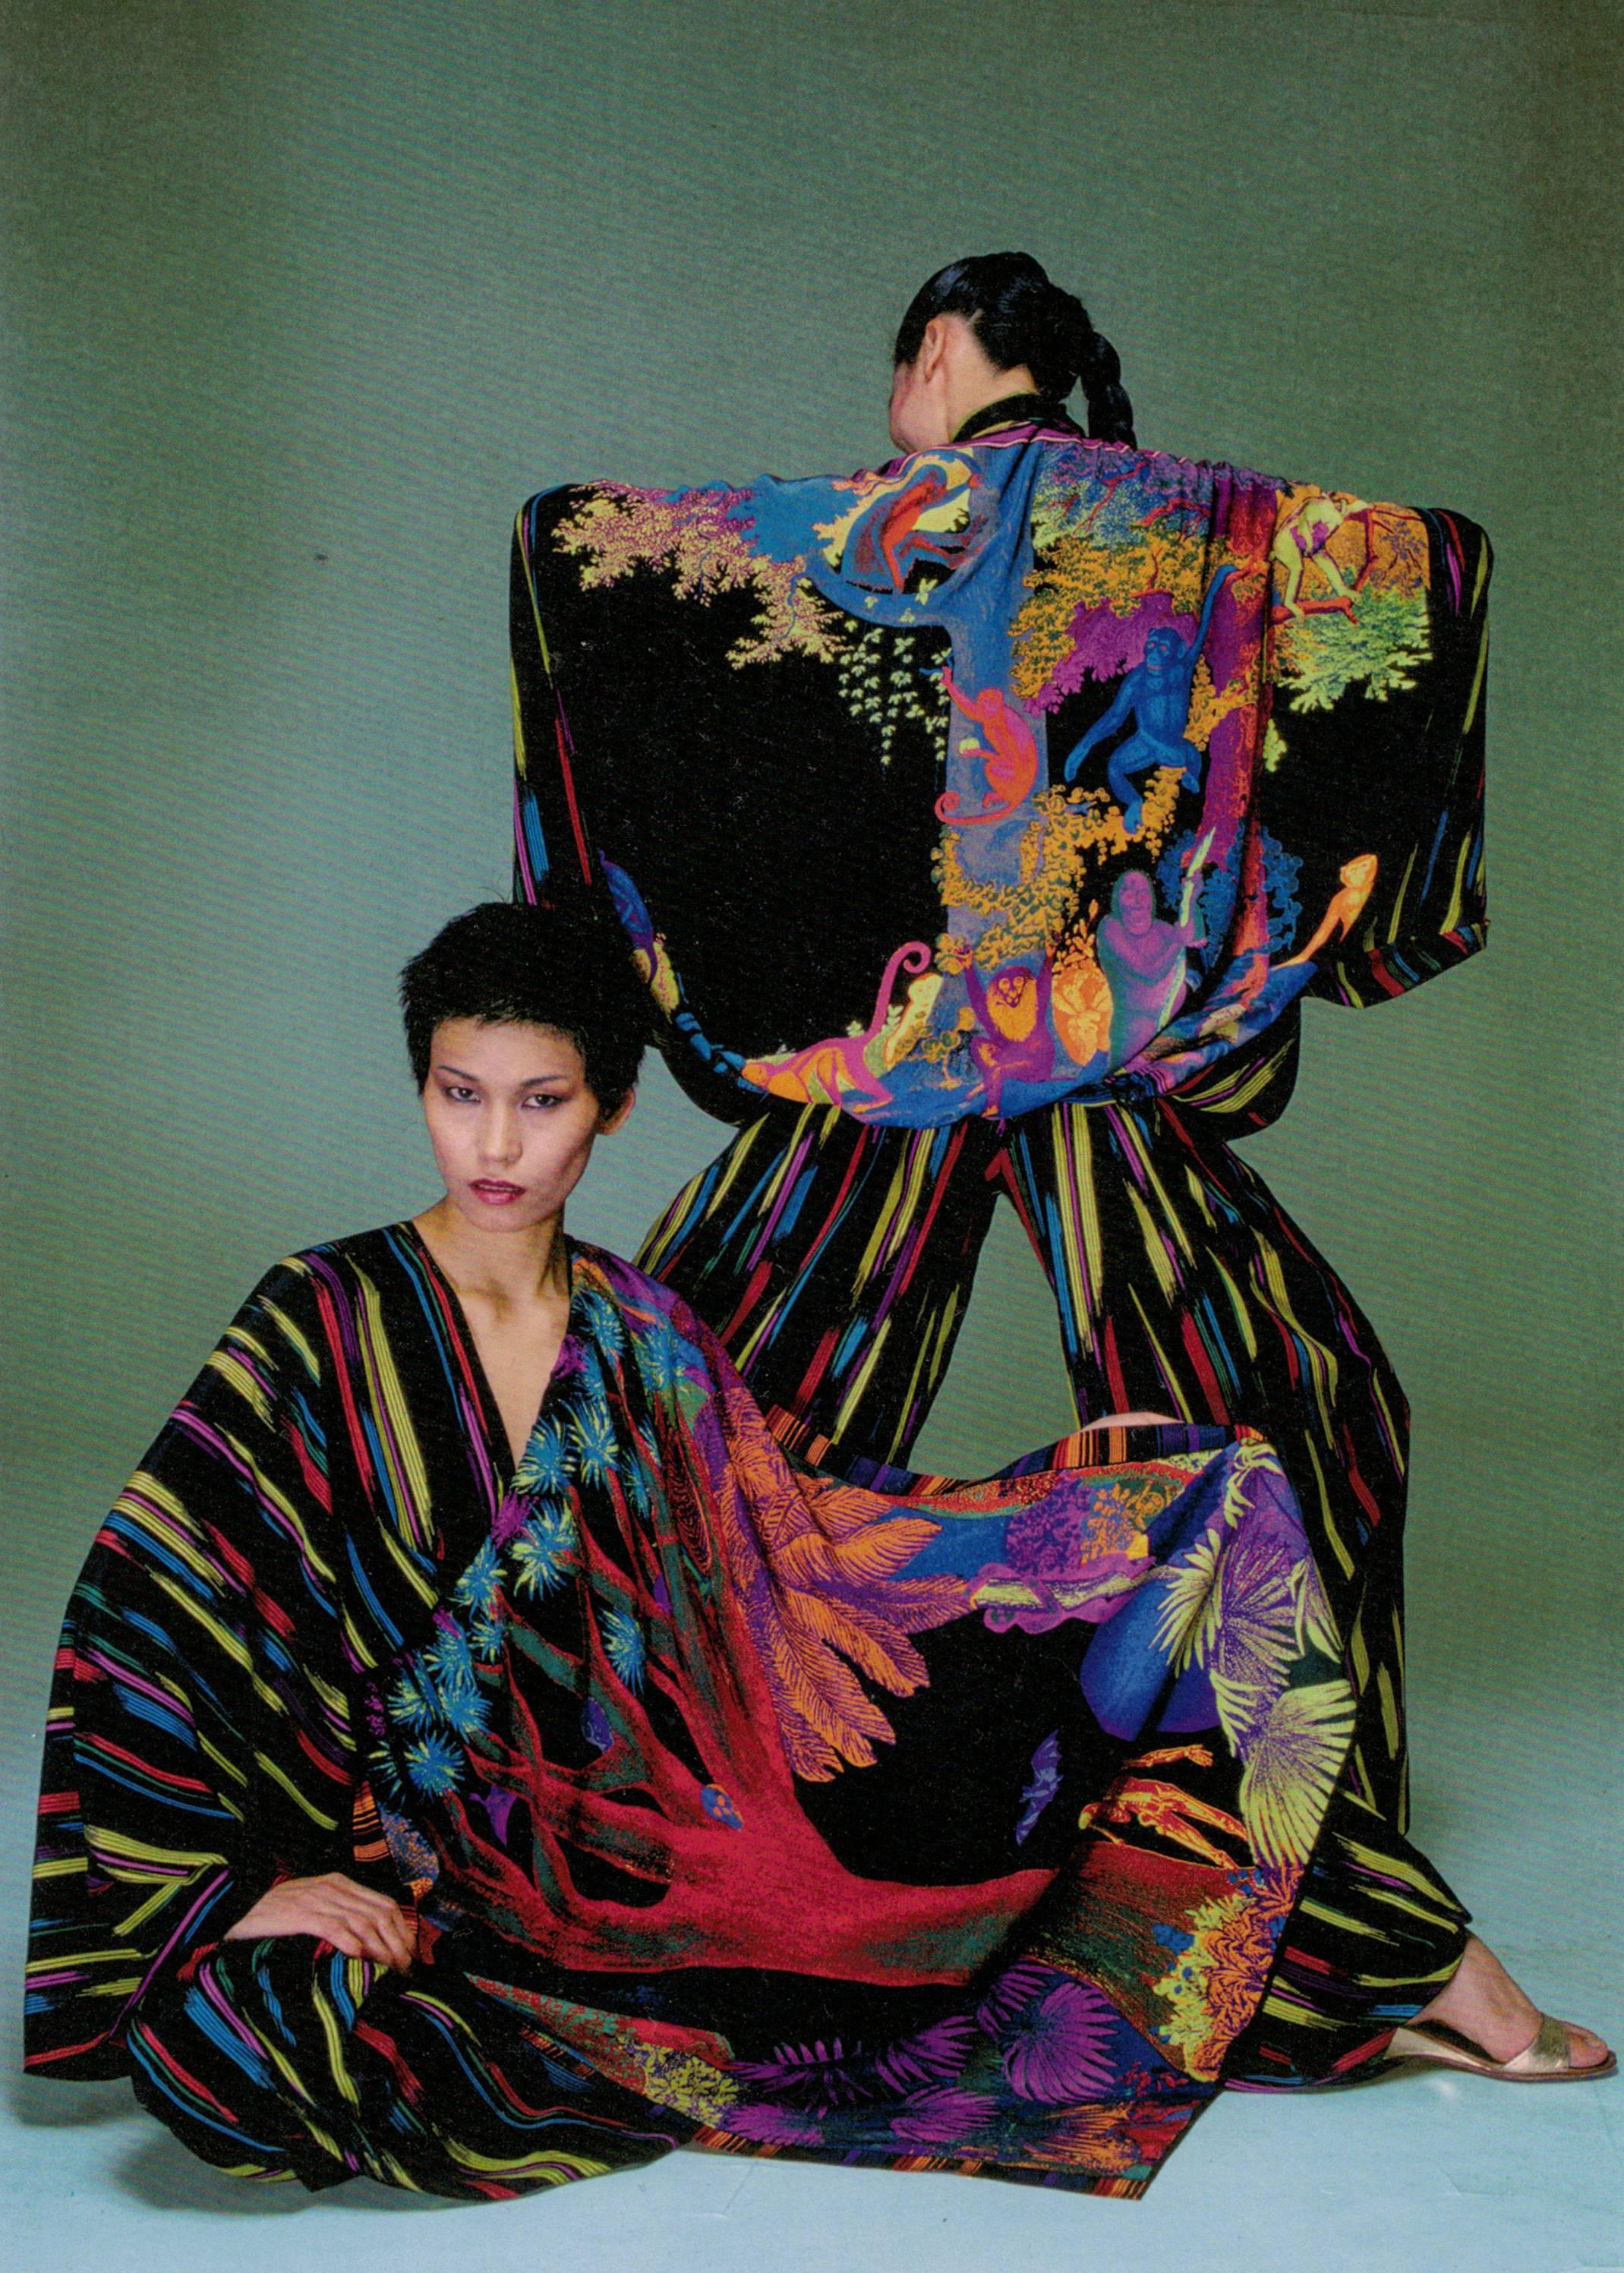 Rare Issey Miyake Autumn-Winter 1976 silk harem jumpsuit, print design by Tadanori Yokoo

- Mandarin collar

- 5 fabric button fastenings 

- wide kimono style sleeves 

- elastic cuffs on ankles

- Print design by Tadanori Yokoo clothing starting